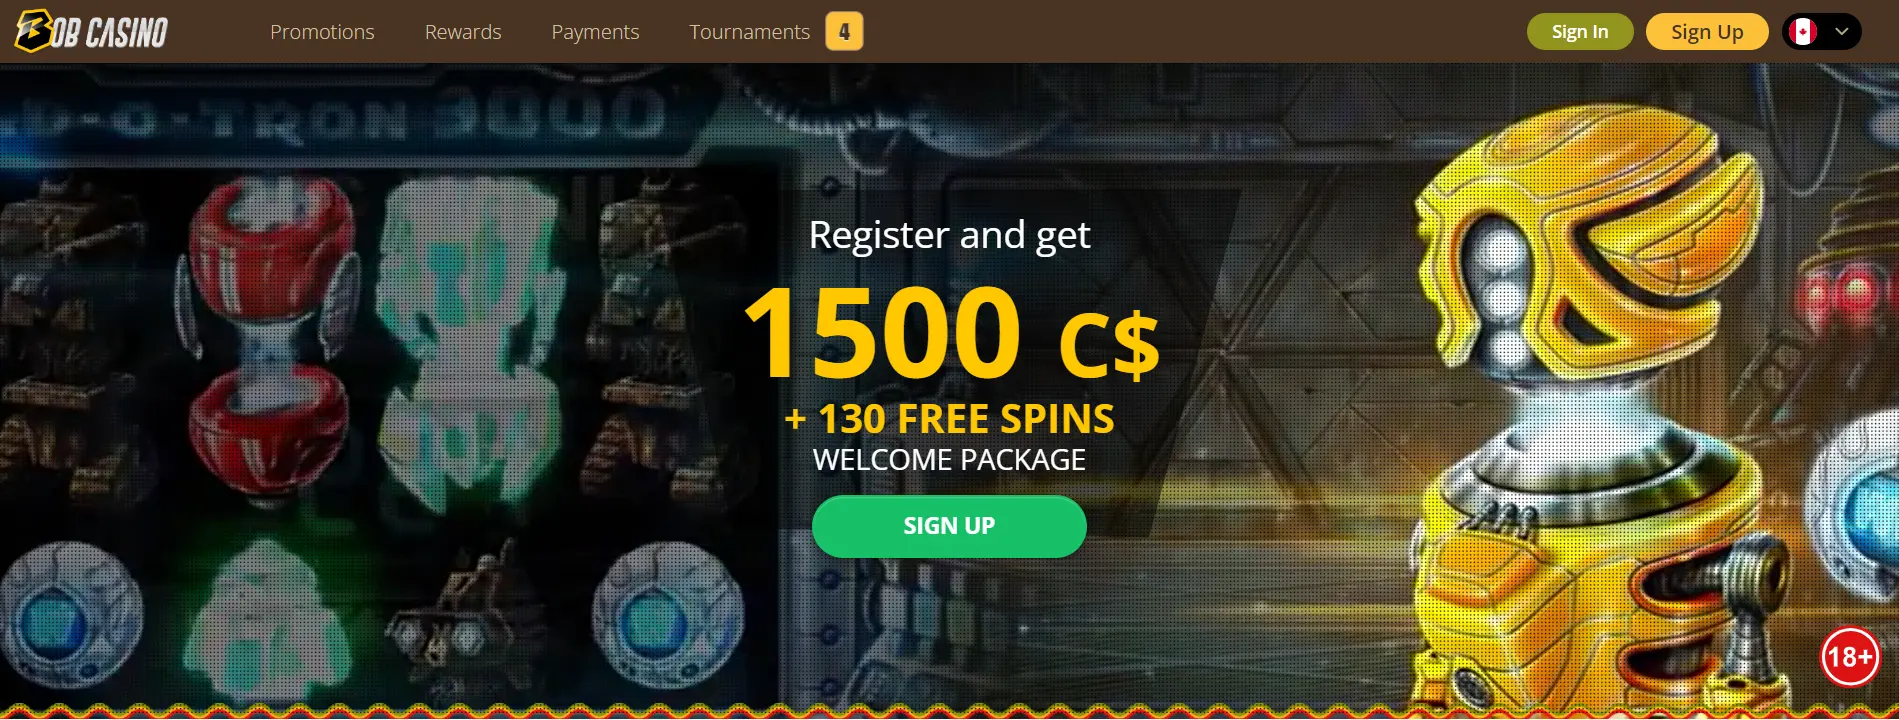 Screenshot of Bob Casino - Online Casino with min Deposit 10$